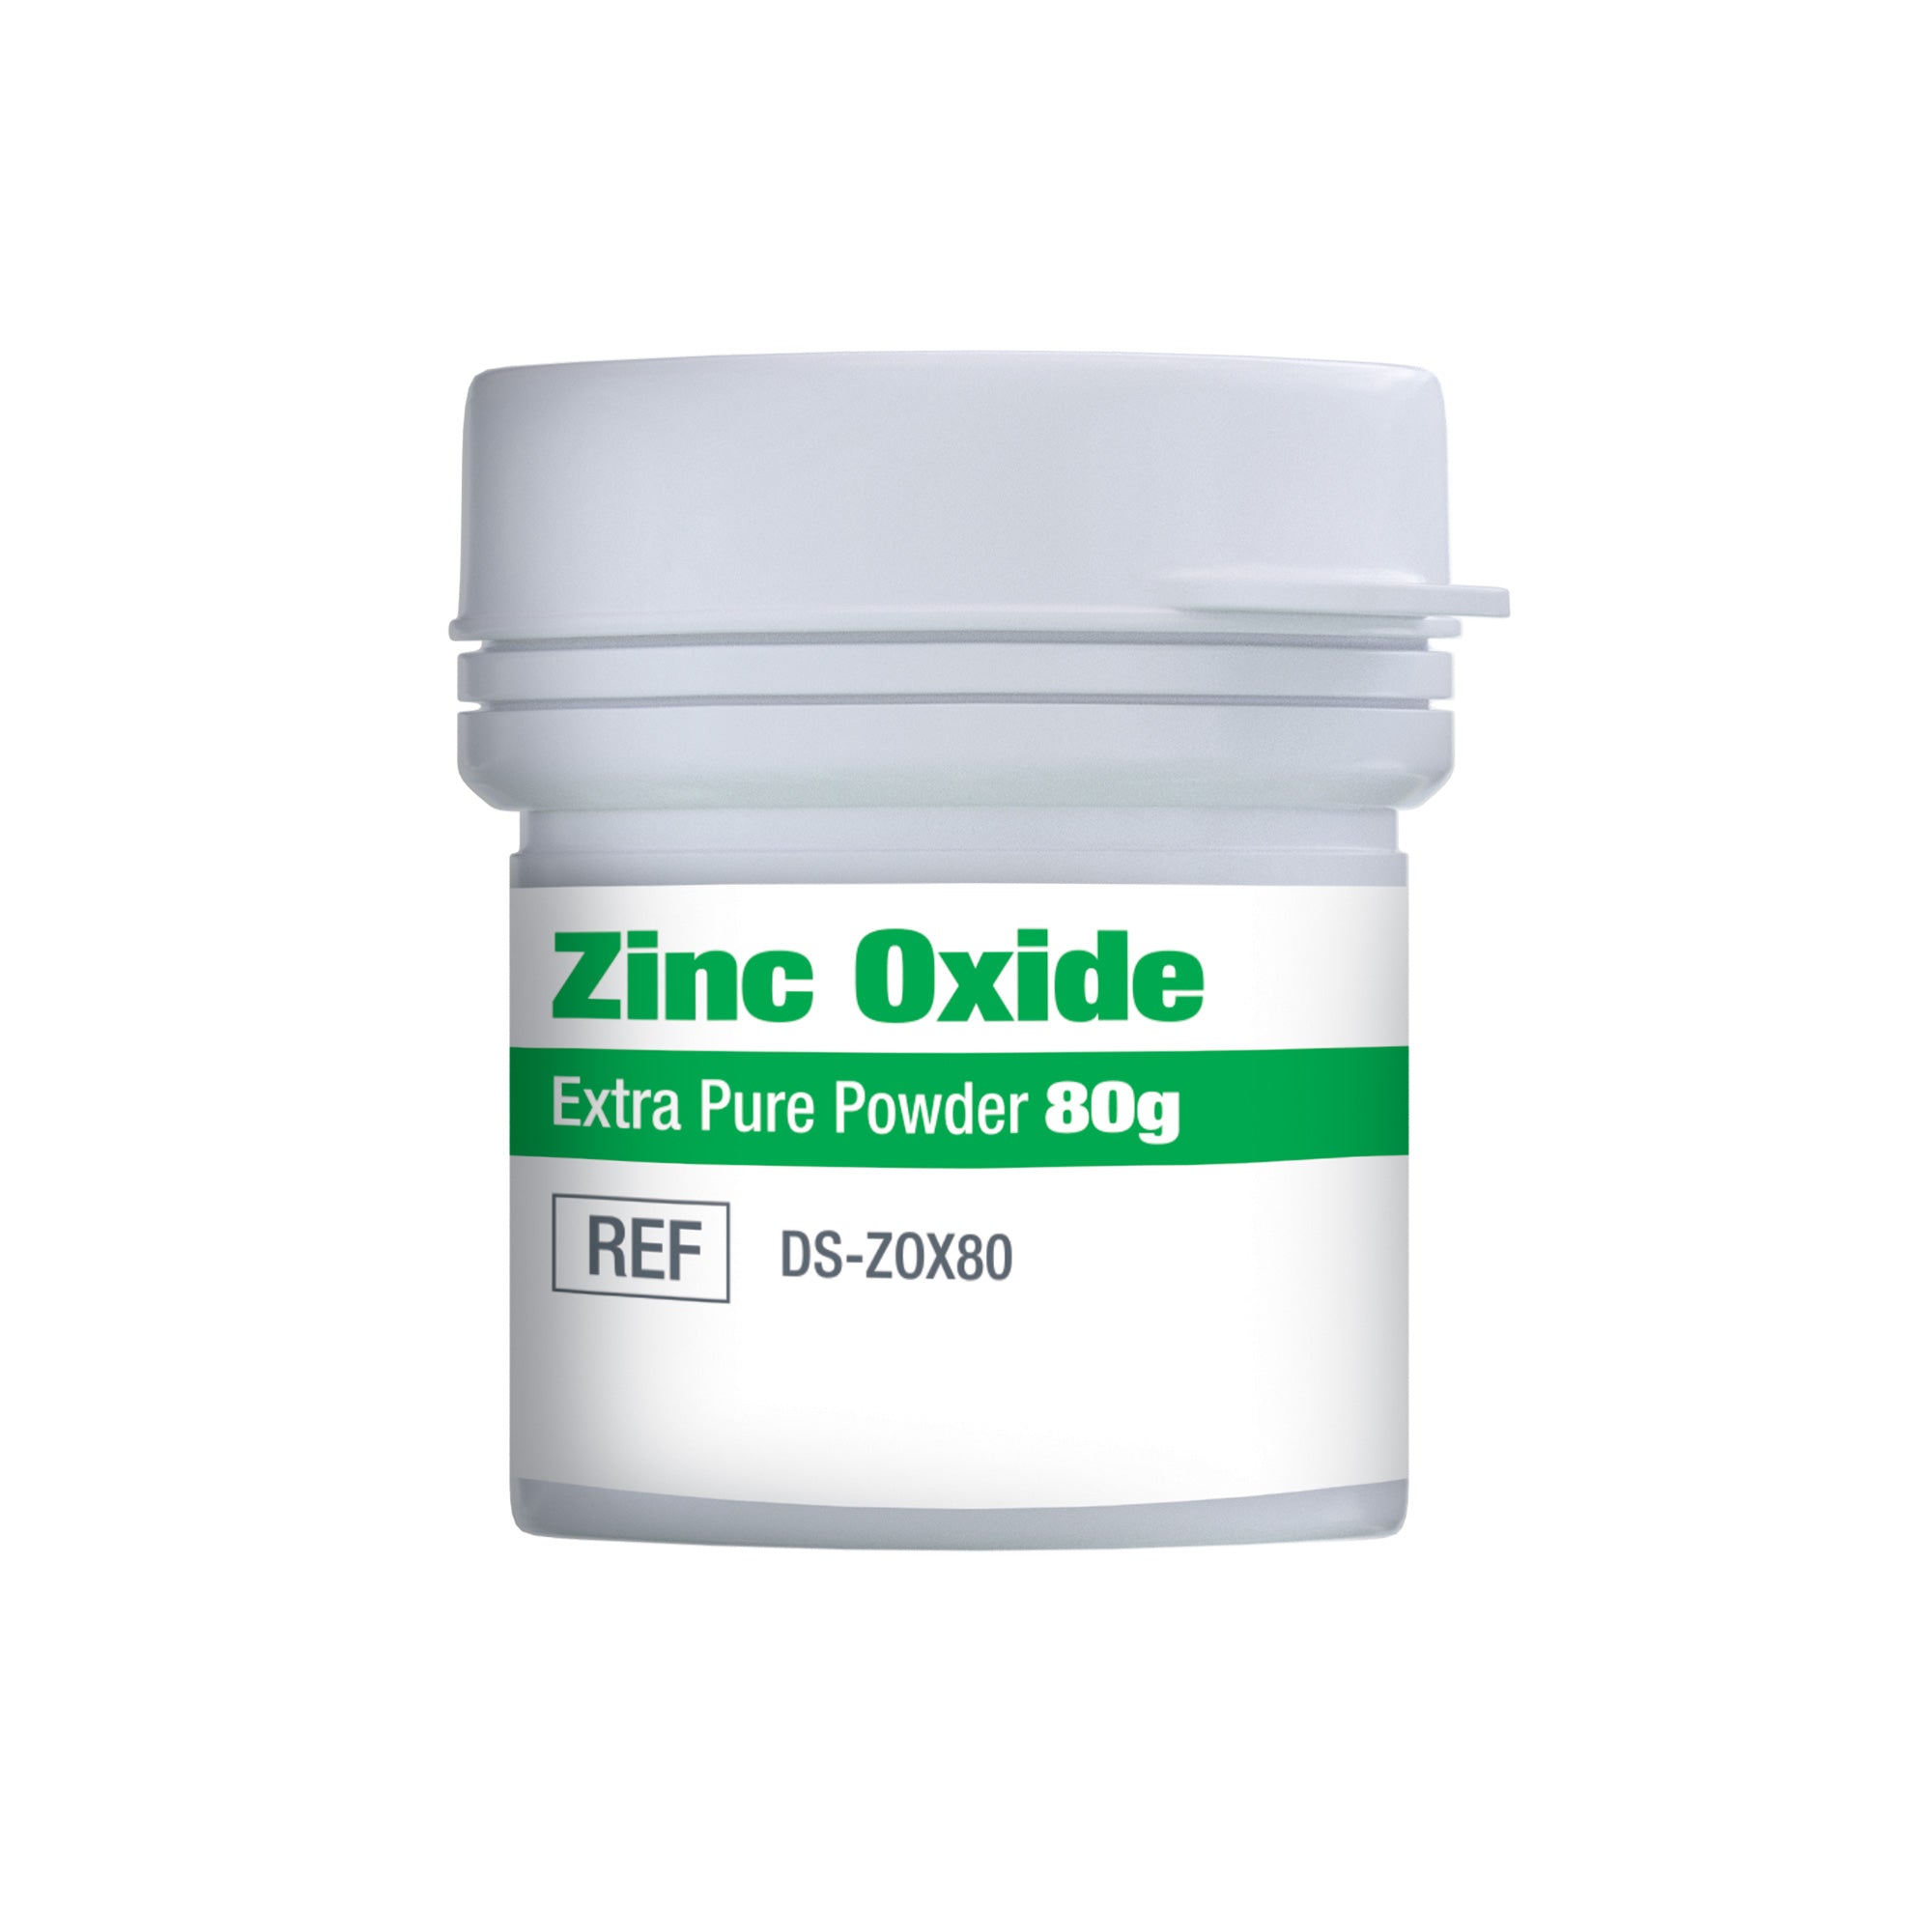 DSI Dental Zinc Oxide Powder For Temporary Dressings 80g Jar